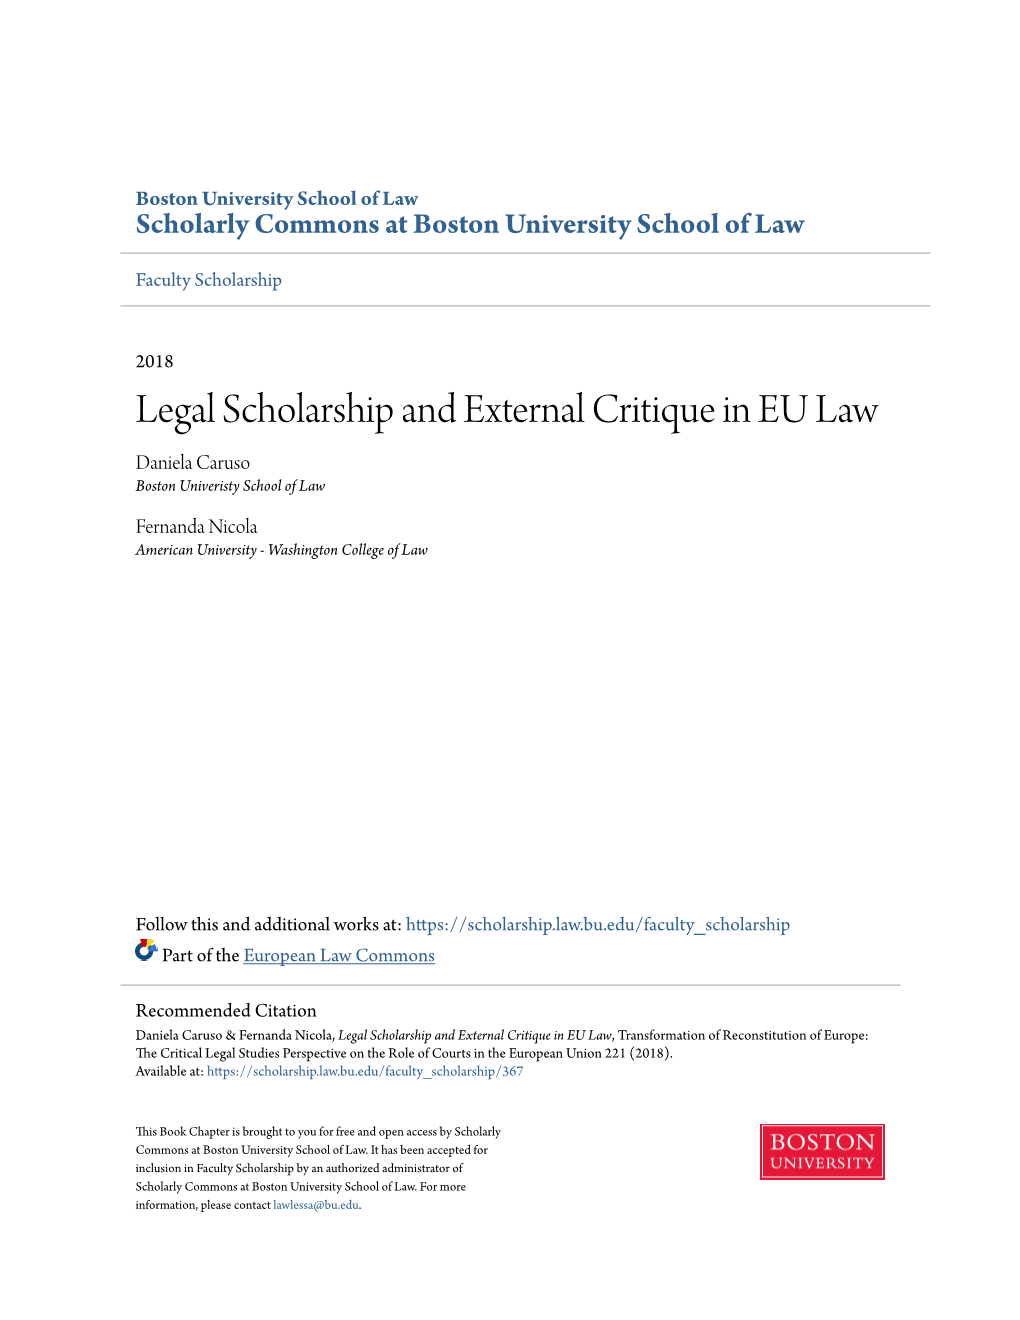 Legal Scholarship and External Critique in EU Law Daniela Caruso Boston Univeristy School of Law